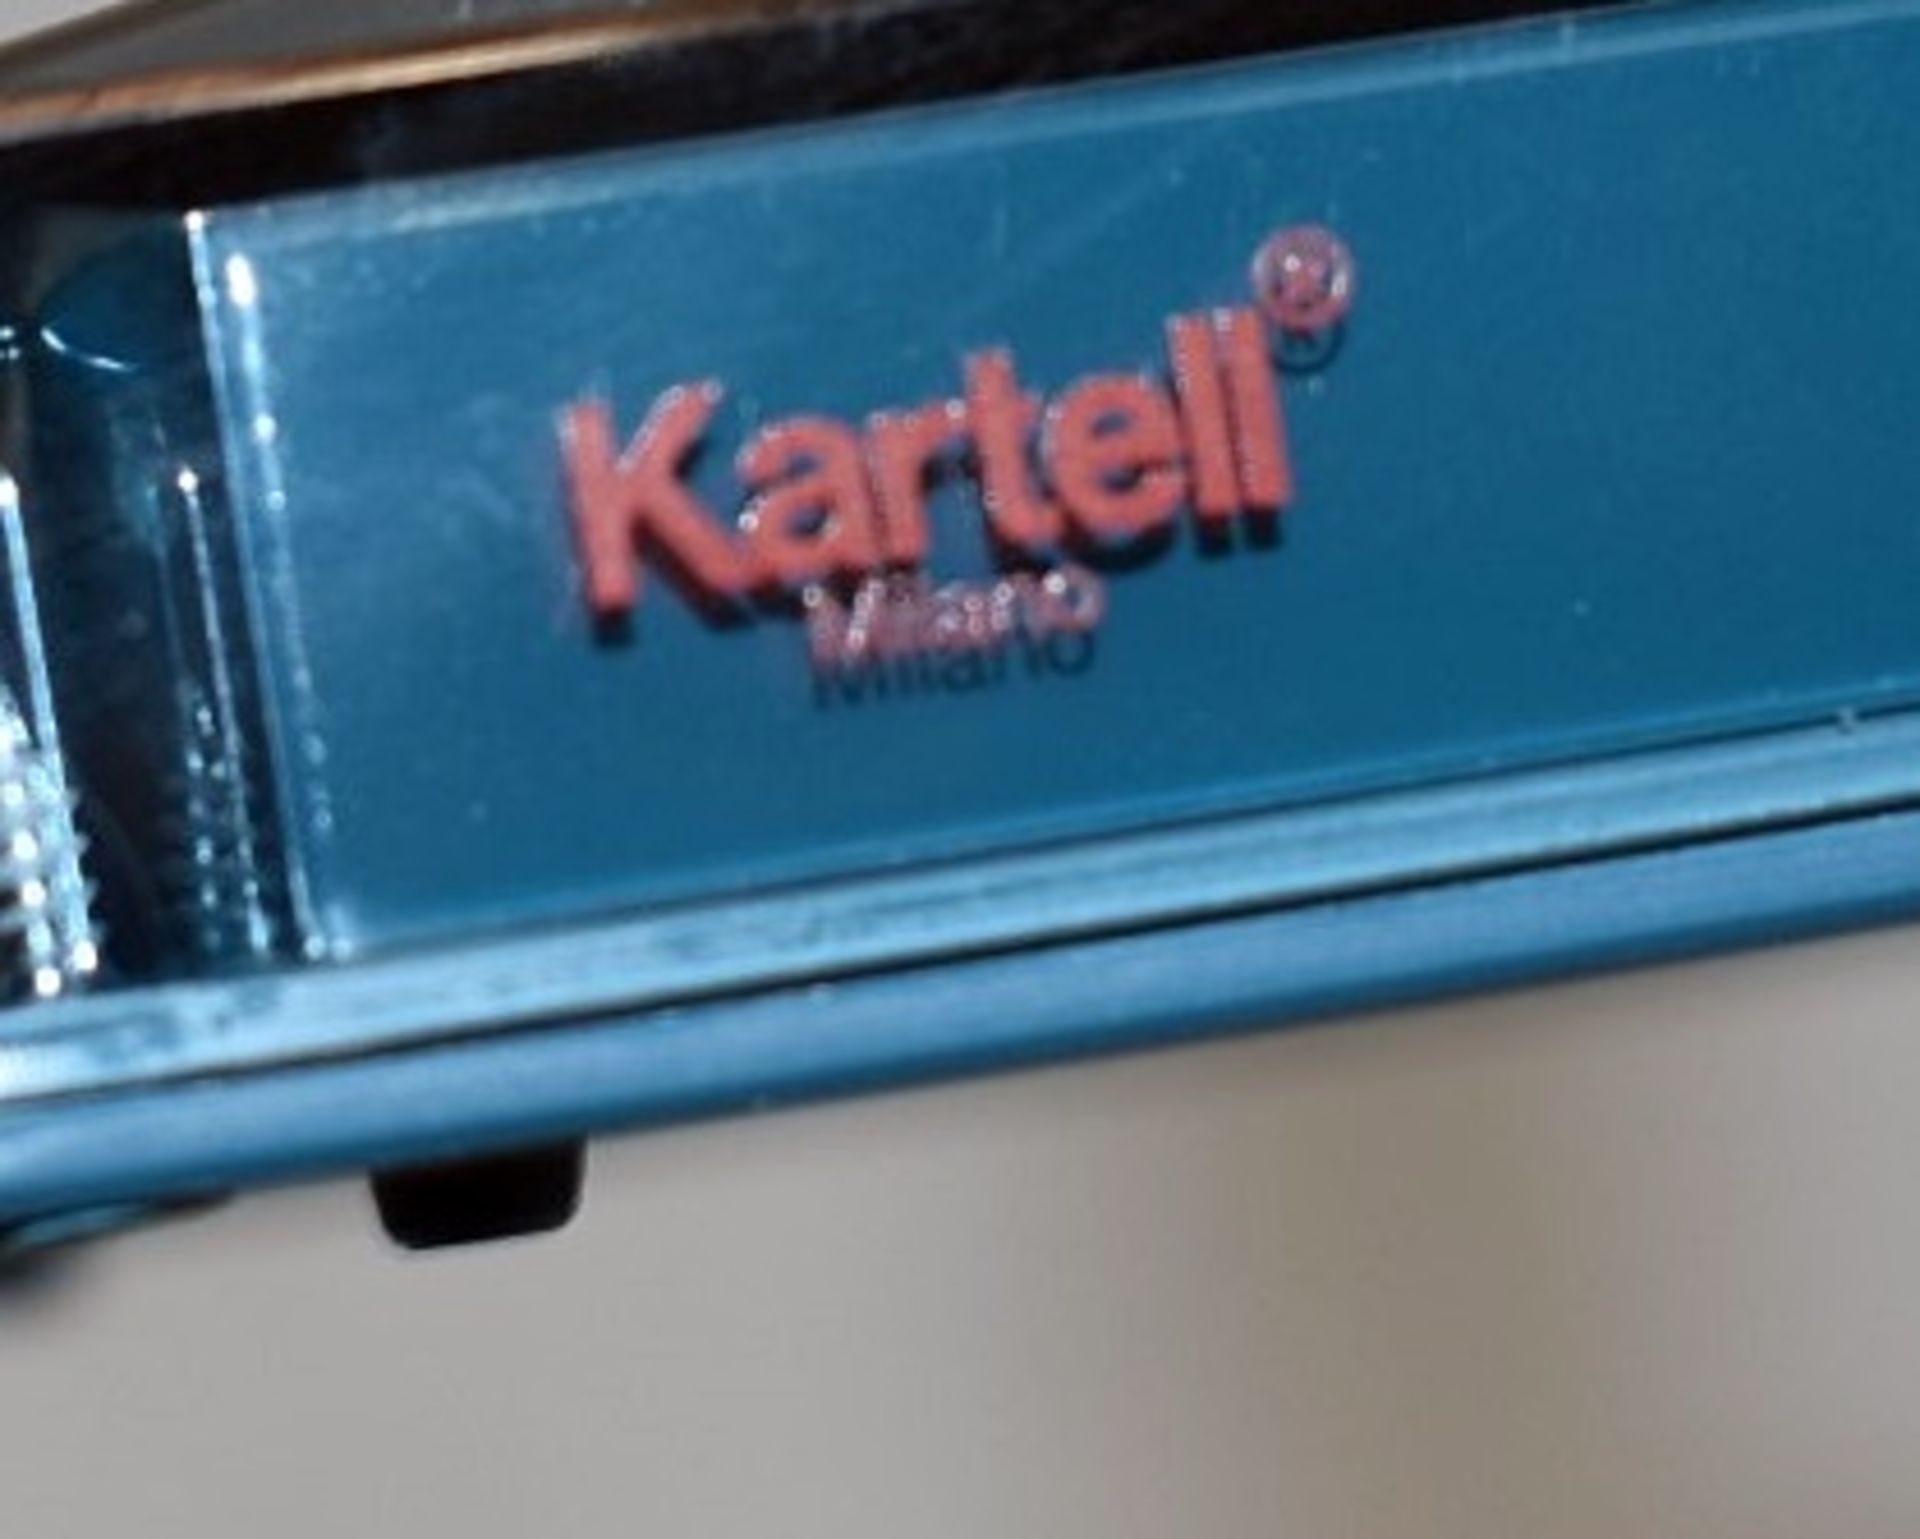 1 x KARTELL 'Big Battery' Designer Table Lamp  - Original Price £200.00 - Unused Boxed Stock - Image 9 of 12